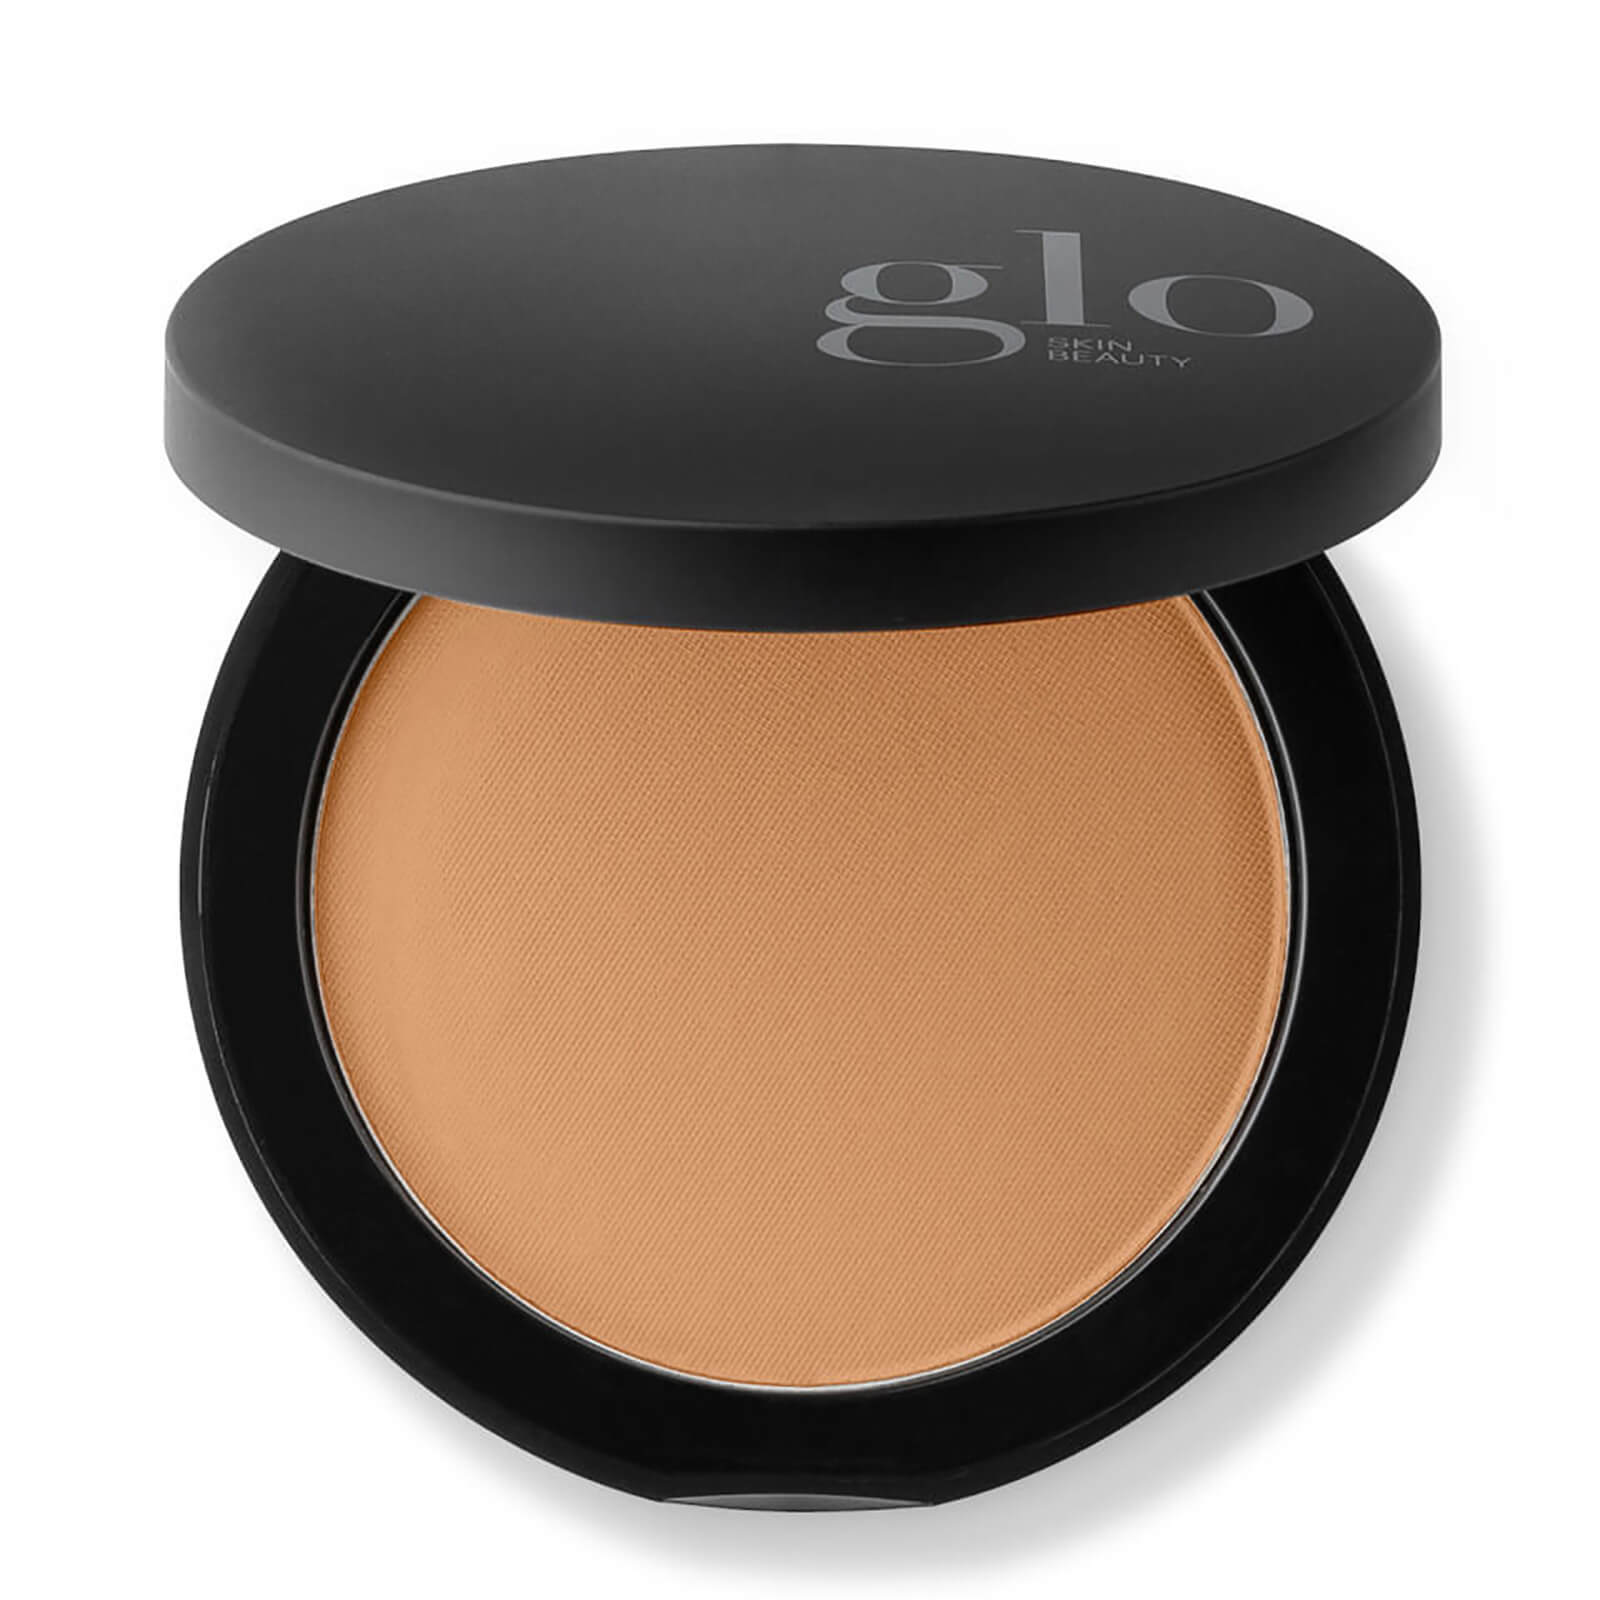 Glo Skin Beauty Pressed Base Powder Foundation (0.35 Oz.) In Tawny Light